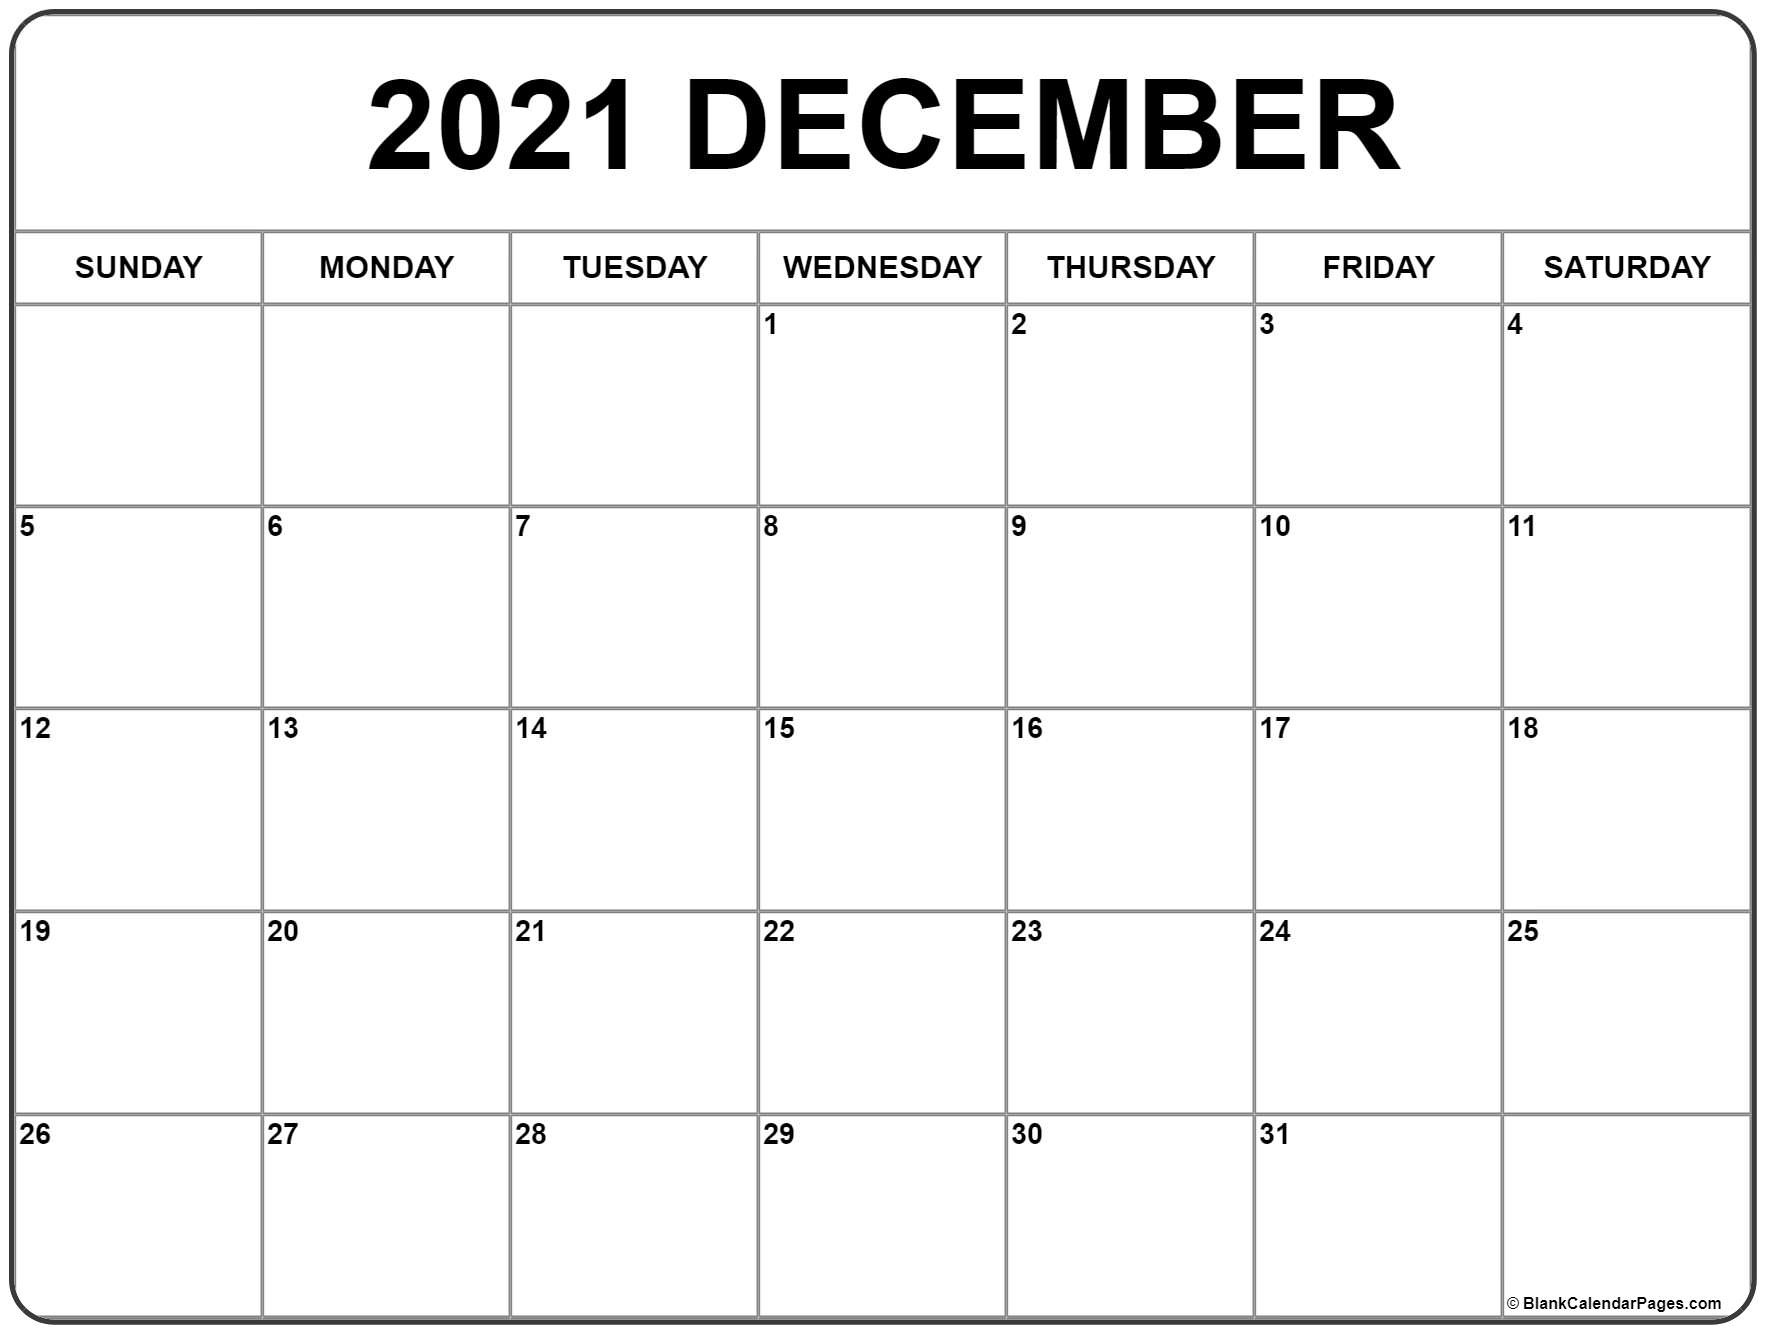 December 2021 Calendar | Free Printable Monthly Calendars-December 2021 Monthly Calendar Printable Free Word